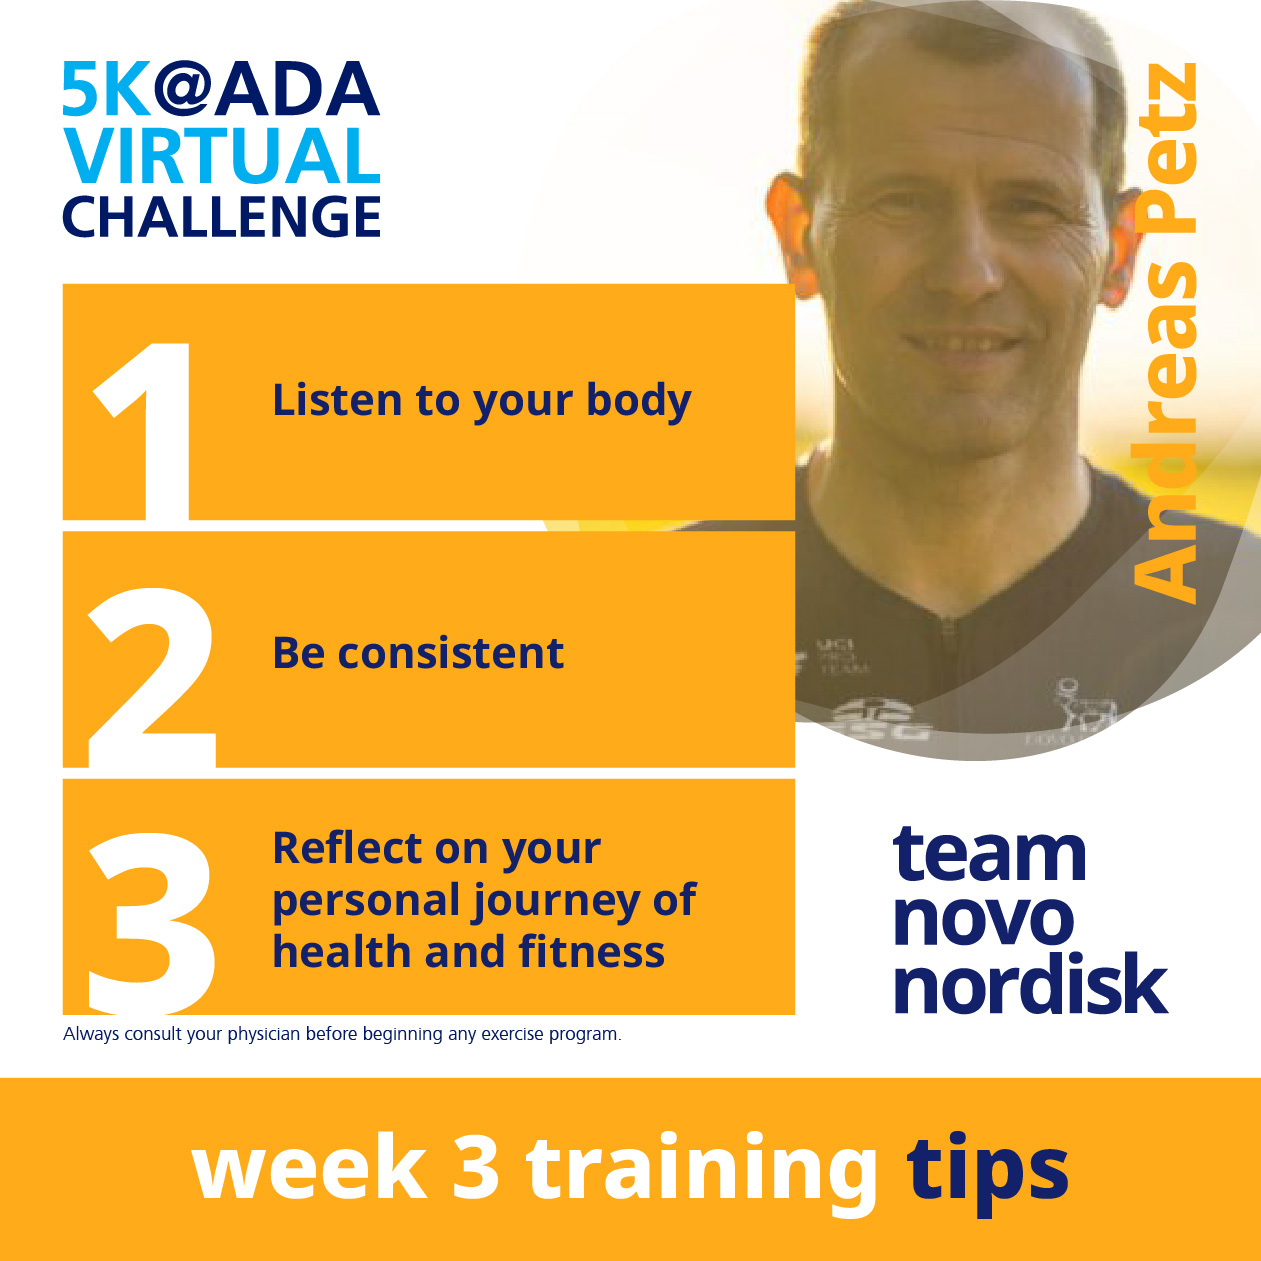 5K Training Plans Week 3 Tips